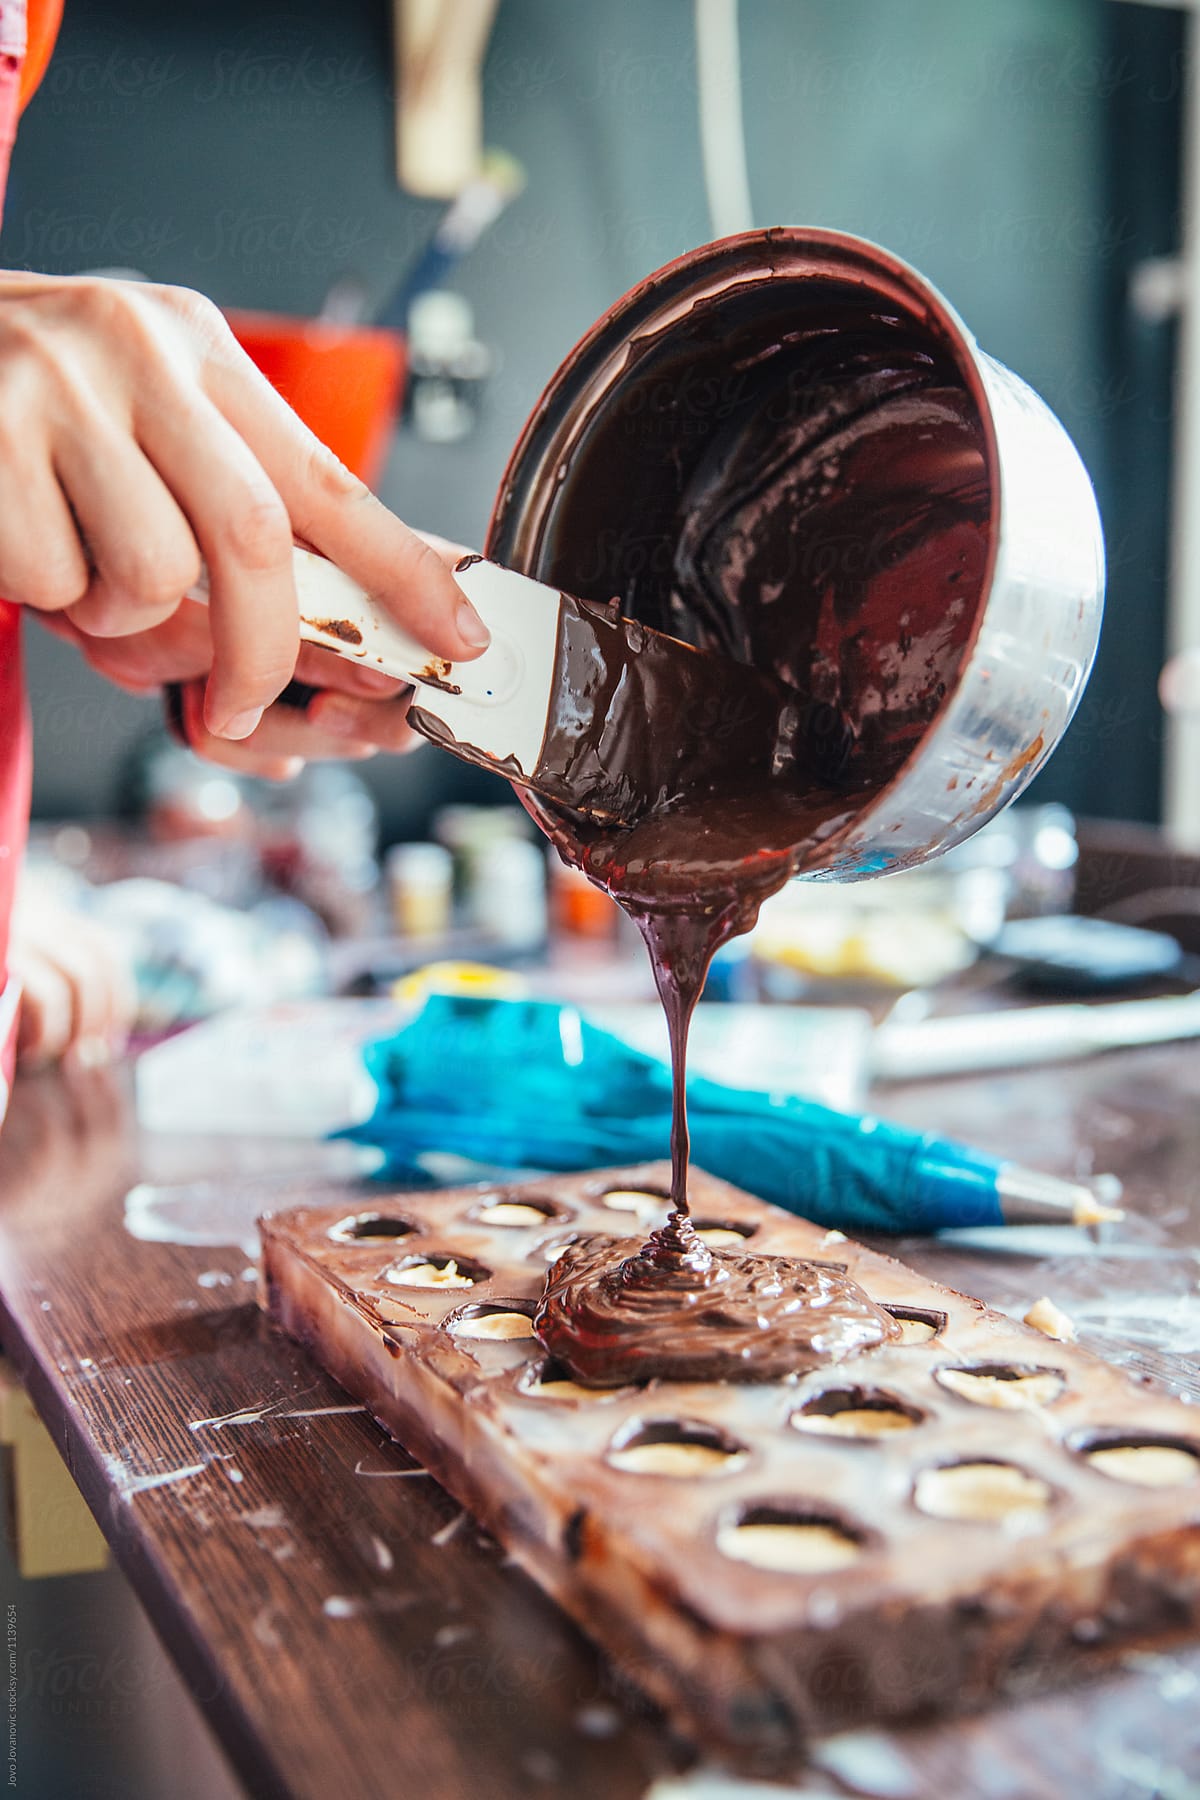 Chocolate making workshop - yummy!